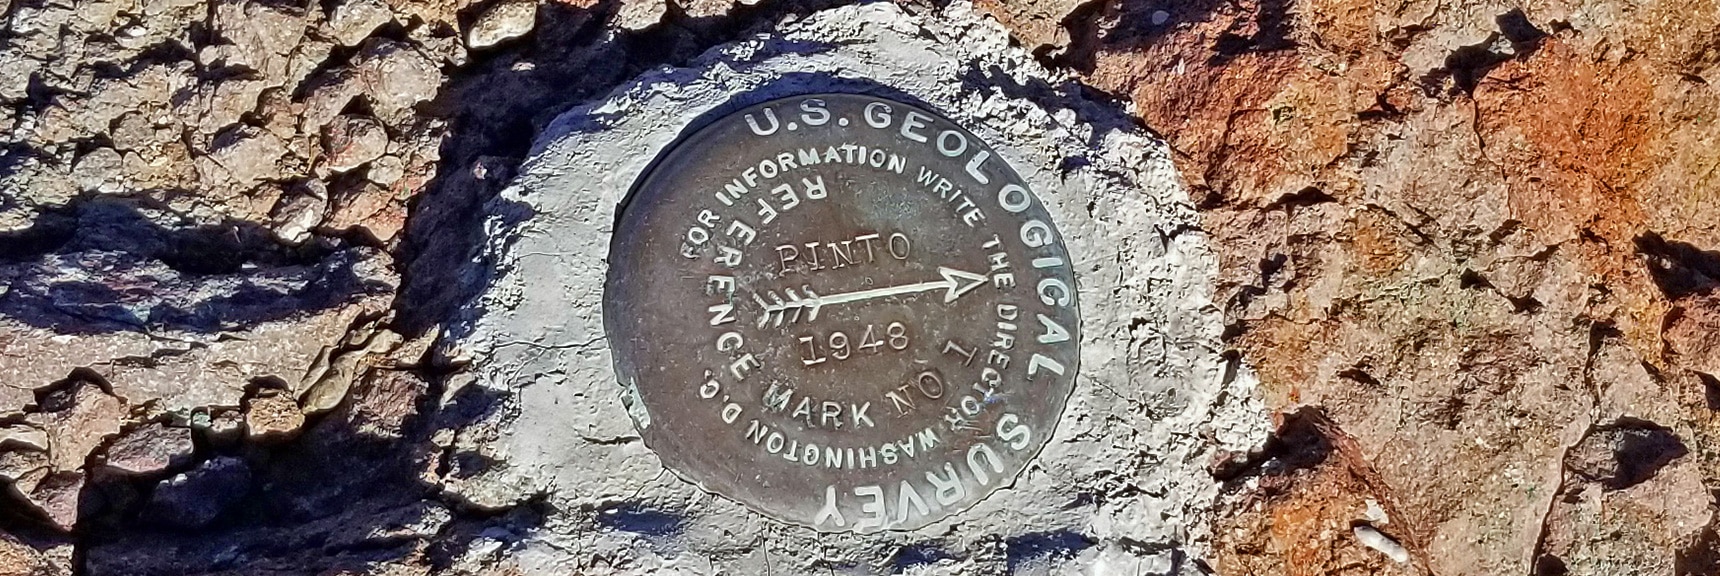 Arrival on Hamblin Mt. Summit - Geological Survey Marker | Hamblin Mountain, Lake Mead National Conservation Area, Nevada